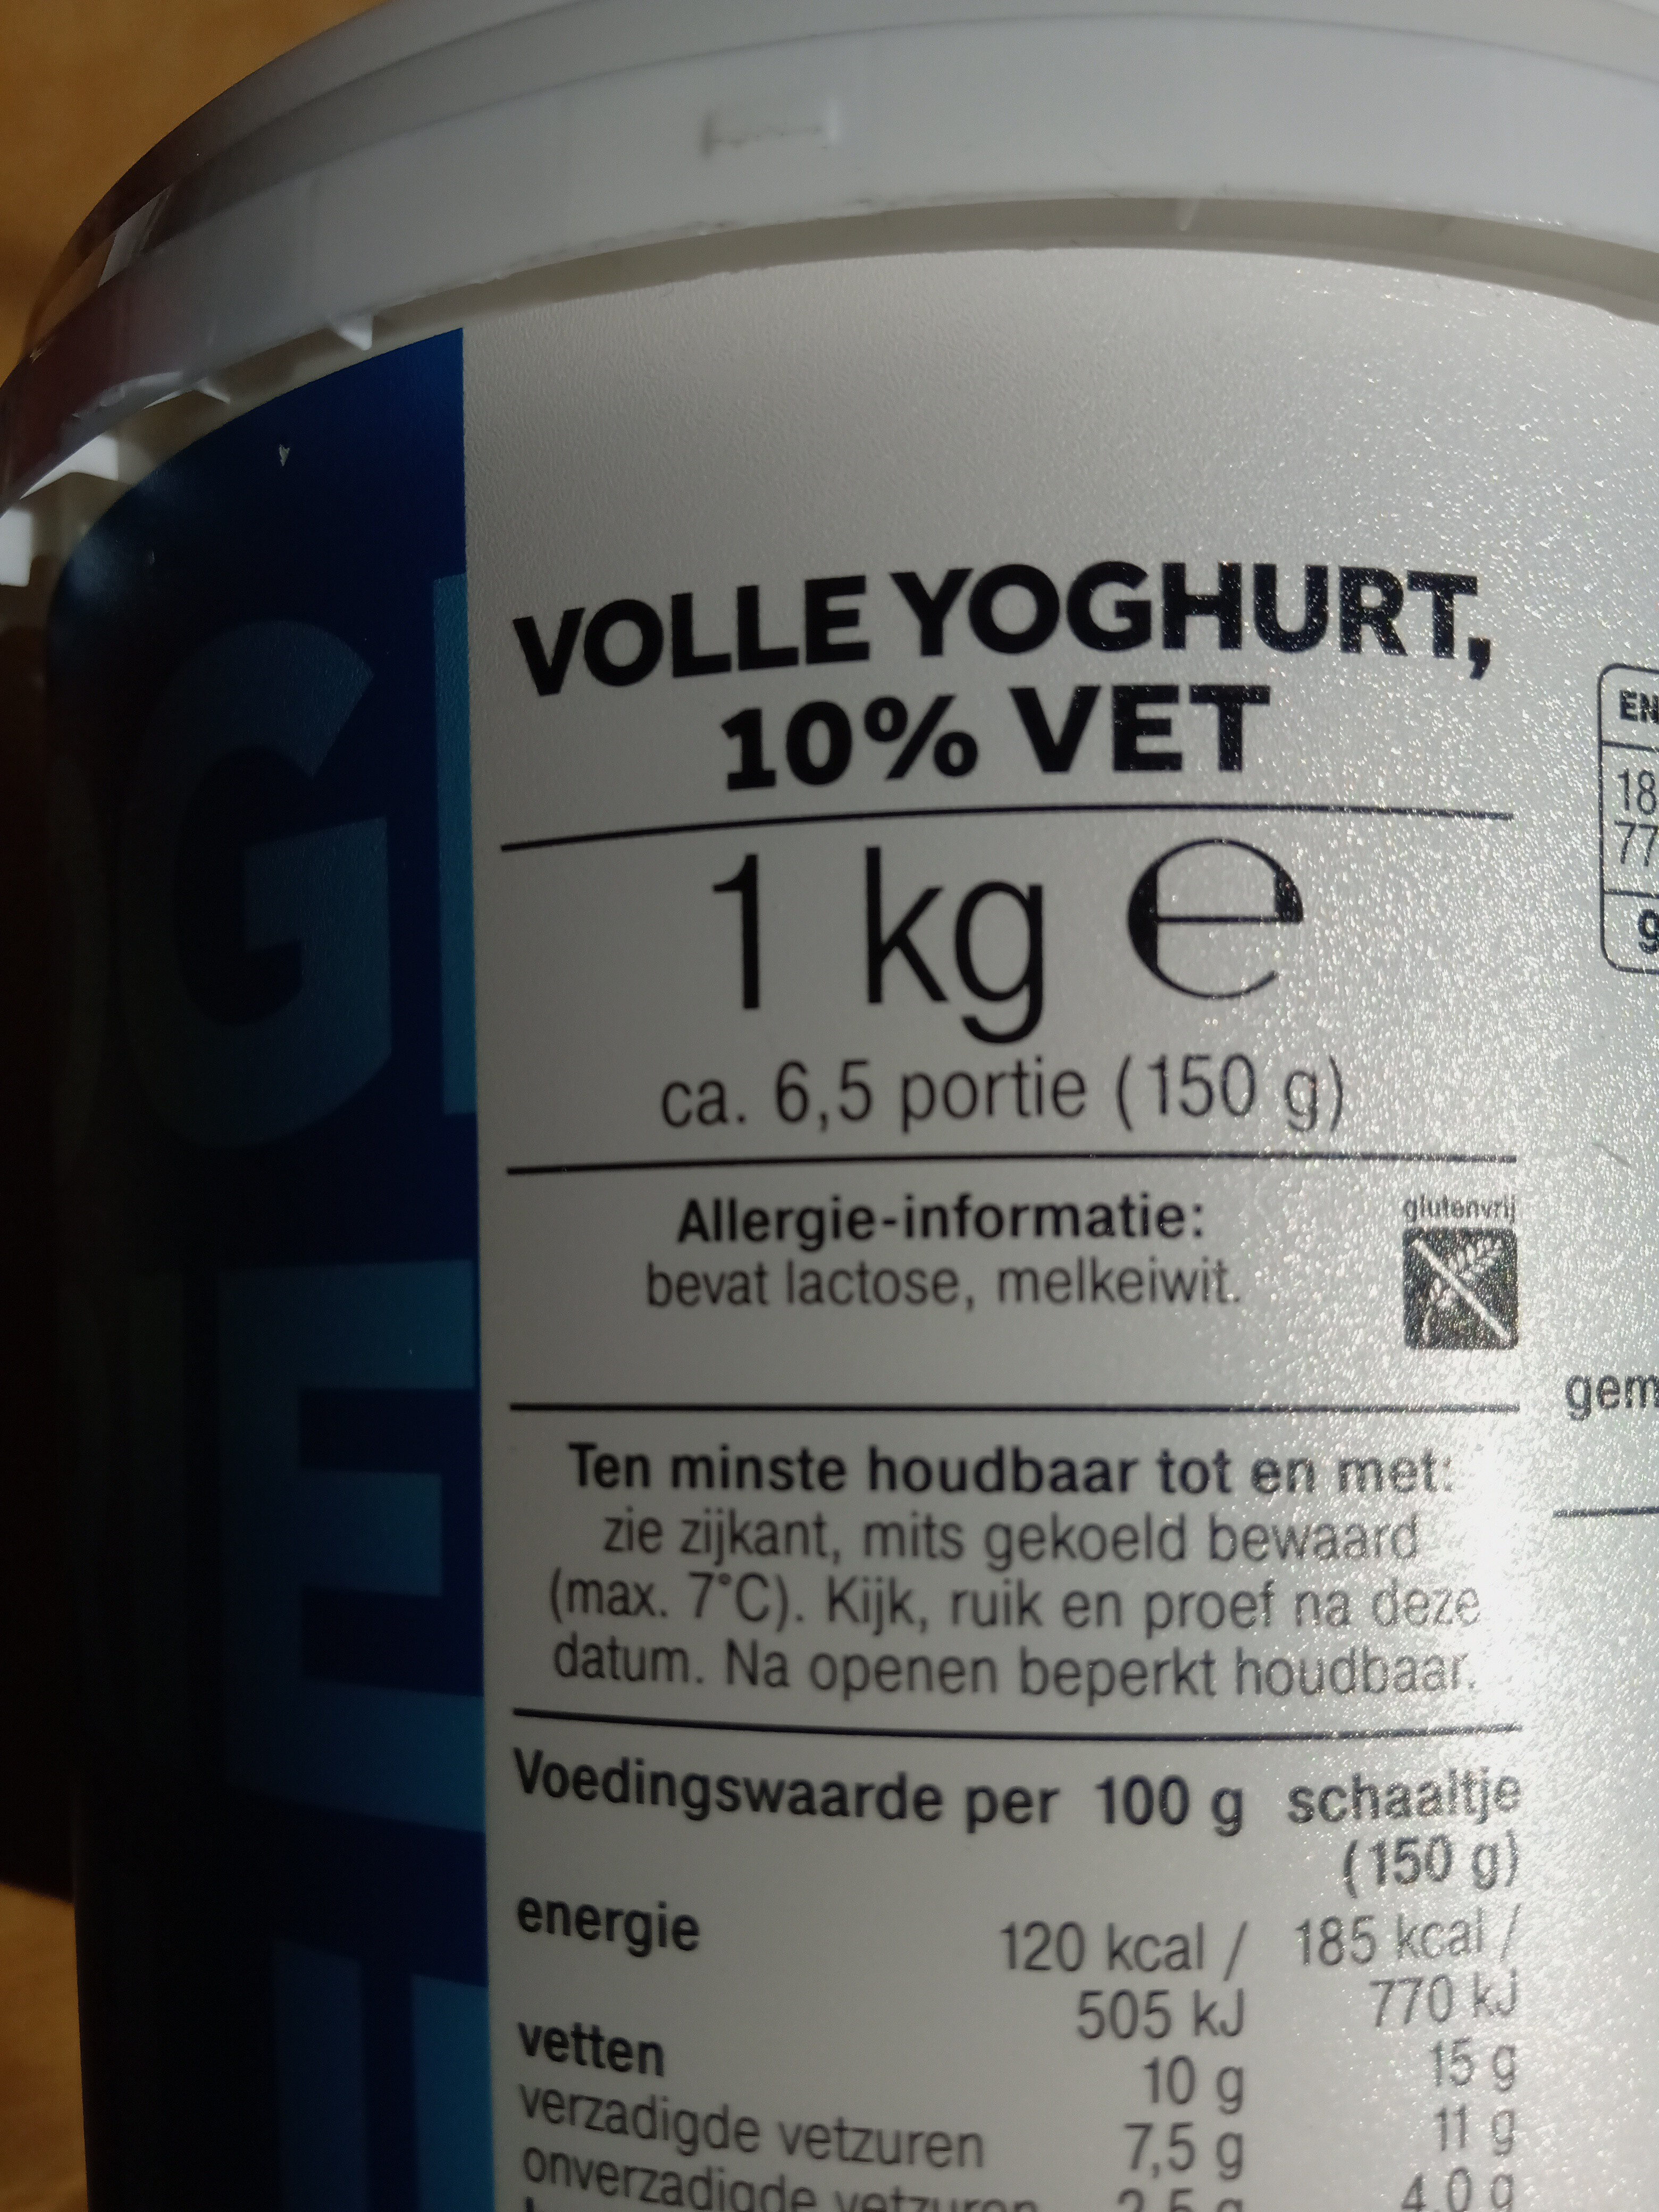 Yoghurt Griekse Stijl - Ingrediënten